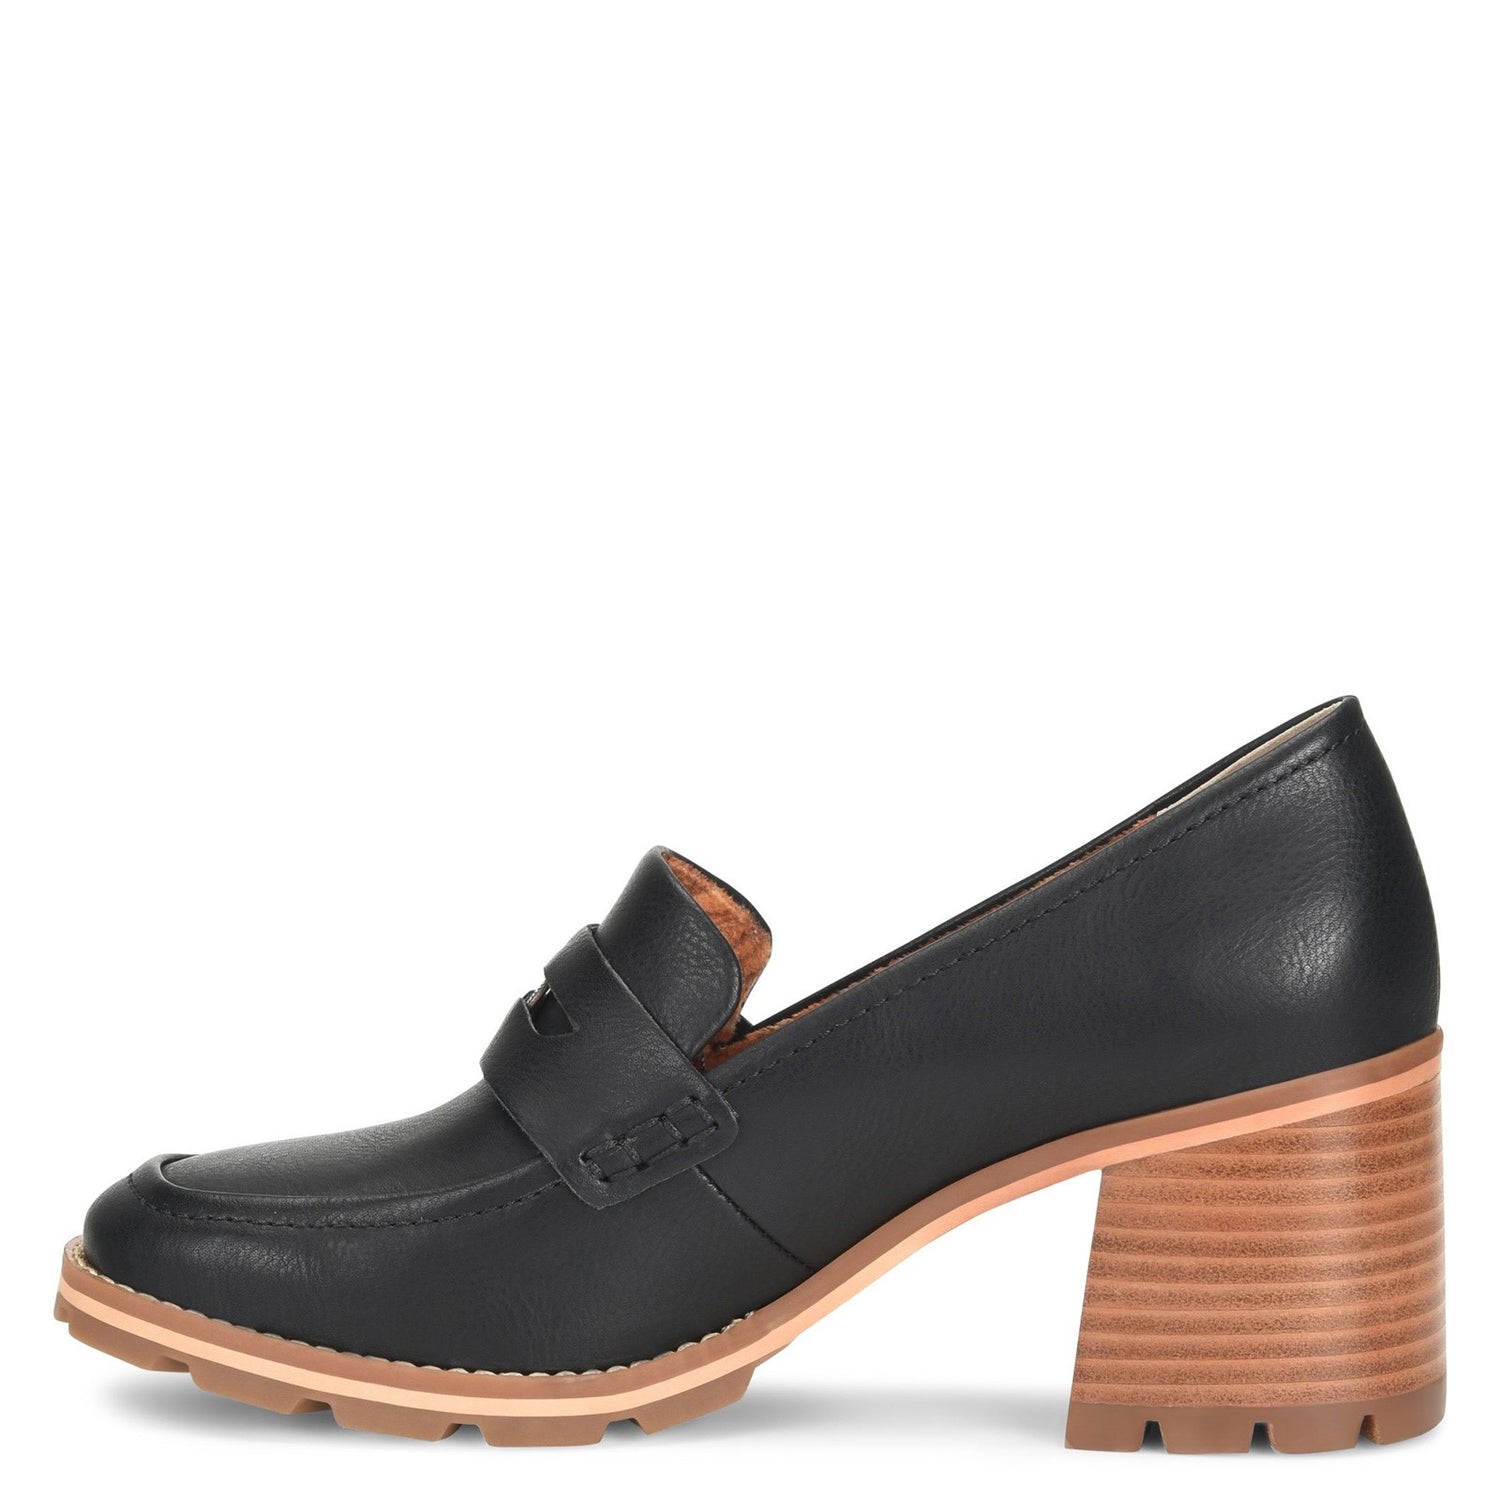 Peltz Shoes  Women's KORKS Corsica Pump Black KR0015109